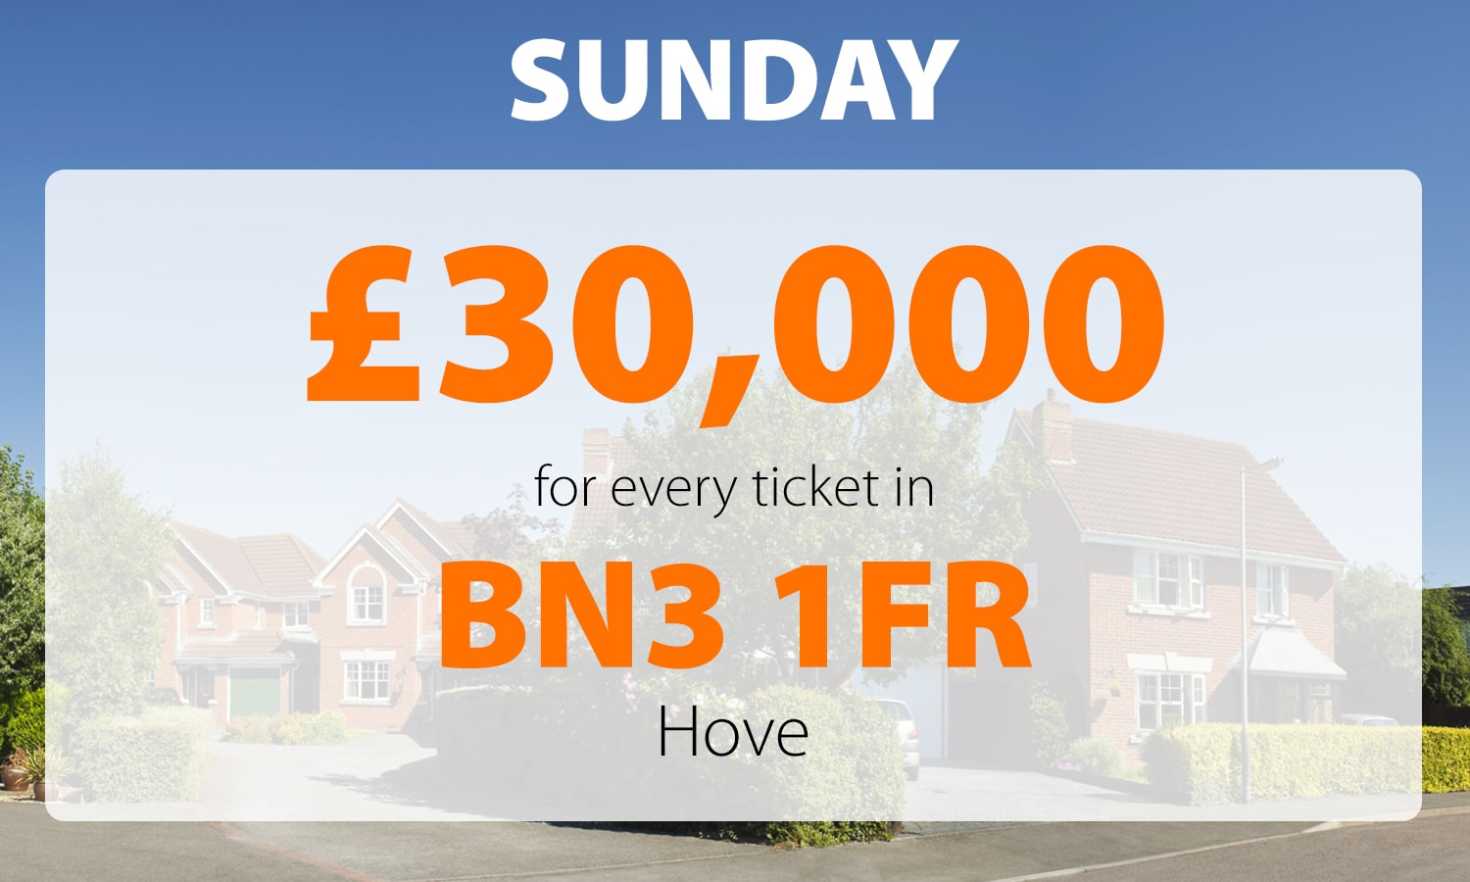 Two lucky winners in postcode BN3 1FR won £30,000 Sunday Street Prizes